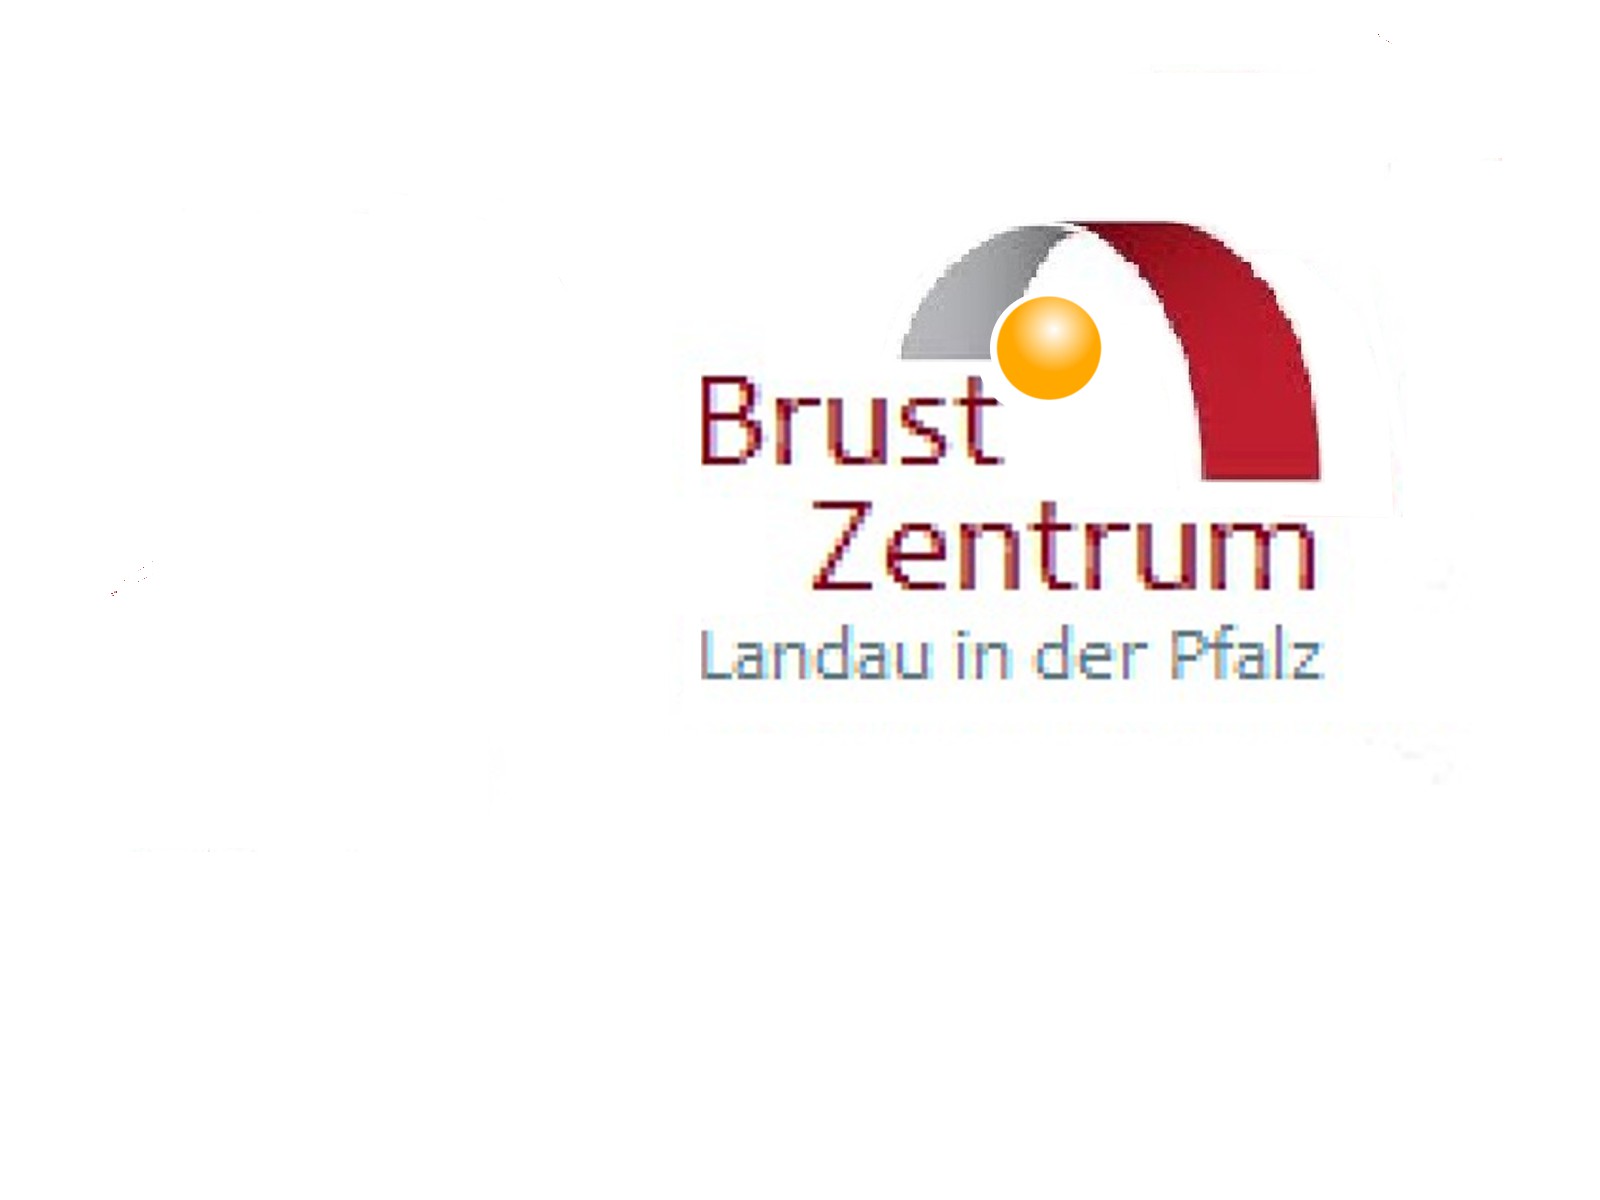 Logo Brustzentrum